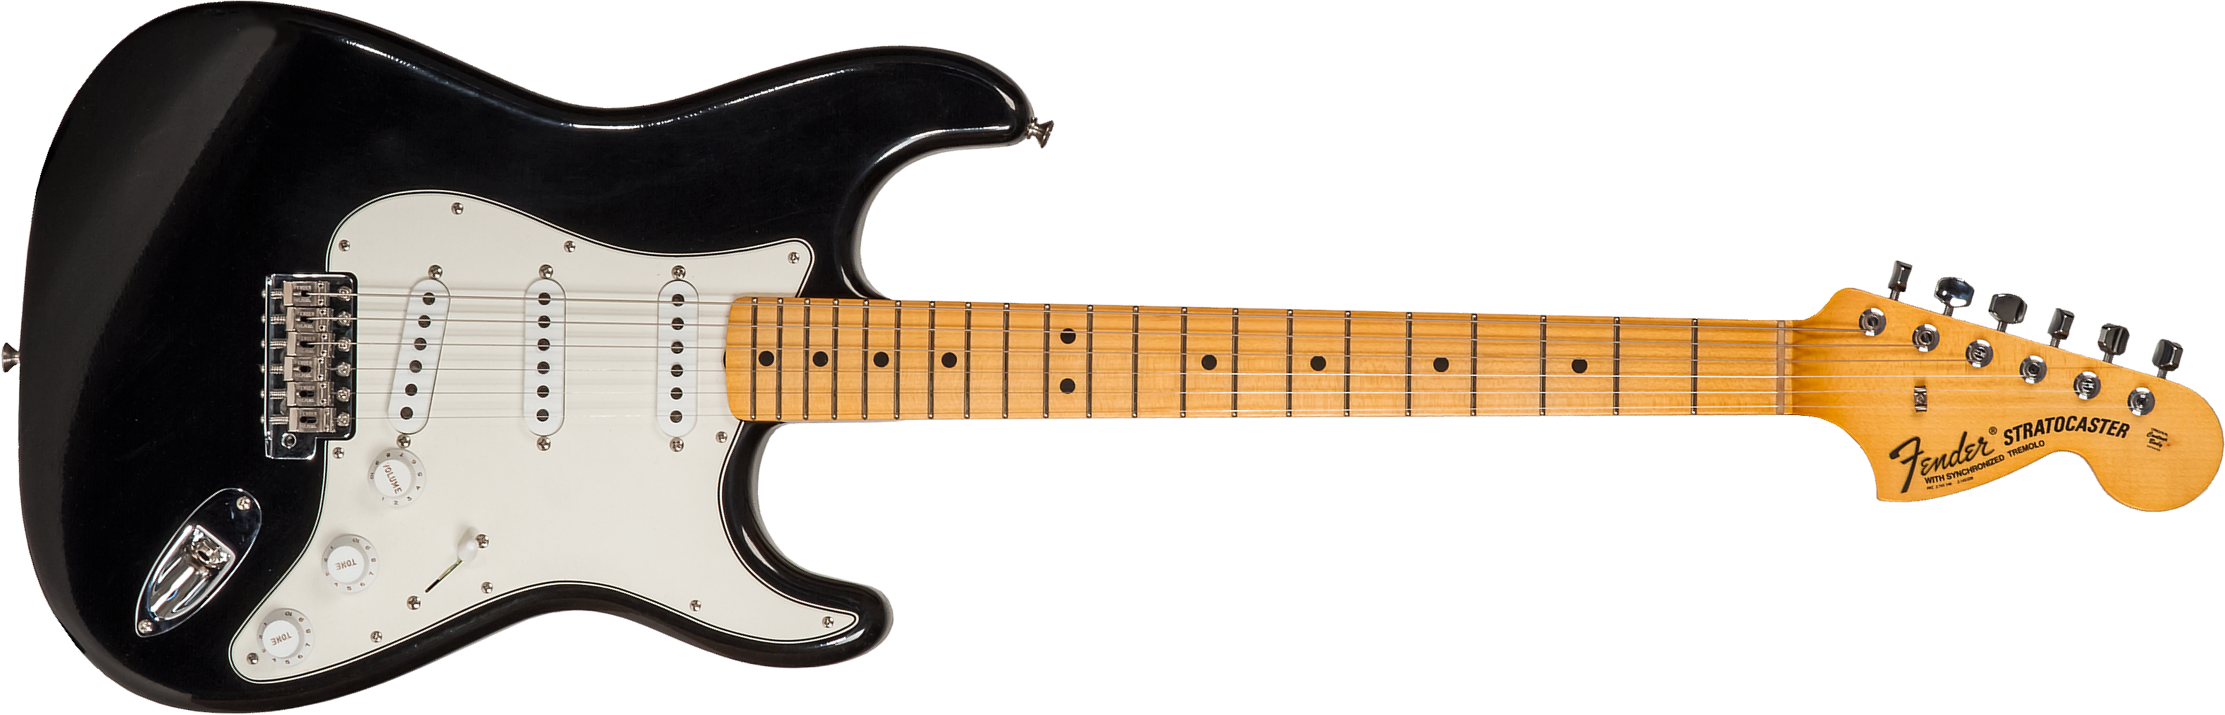 Fender Custom Shop Strat 1969 3s Trem Mn #r127670 - Closet Classic Black - Elektrische gitaar in Str-vorm - Main picture